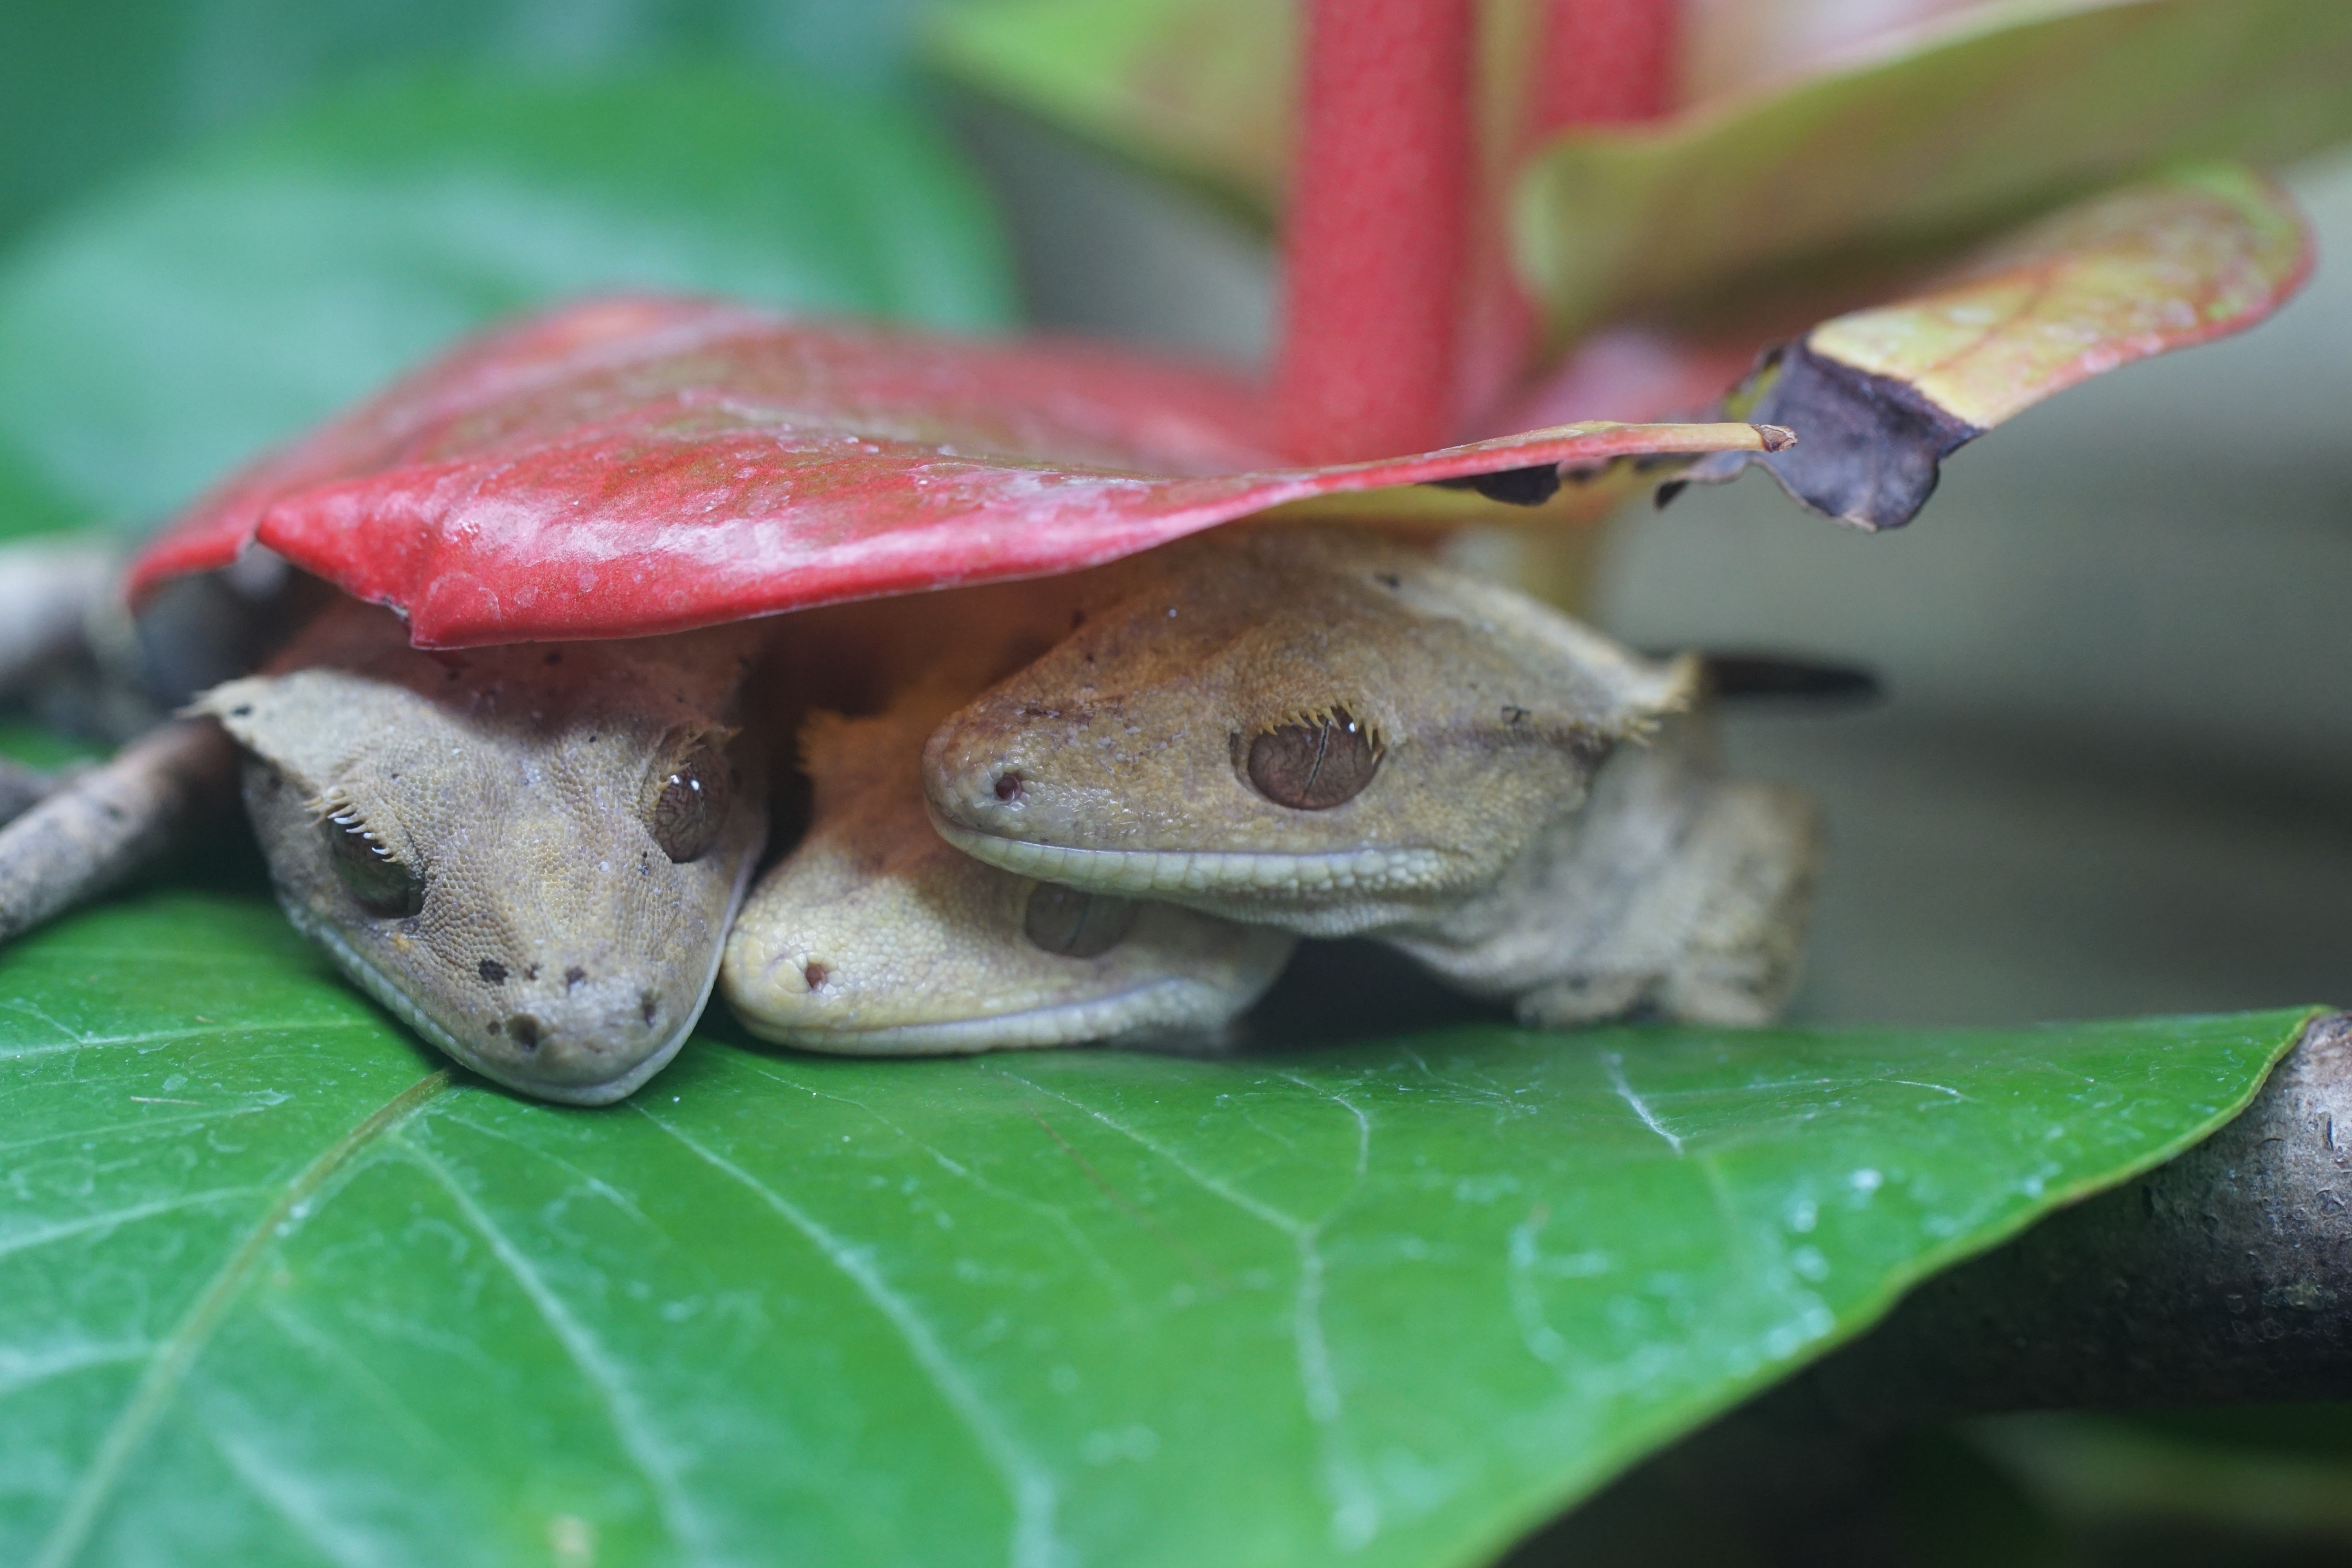 brown lizards under red leaf